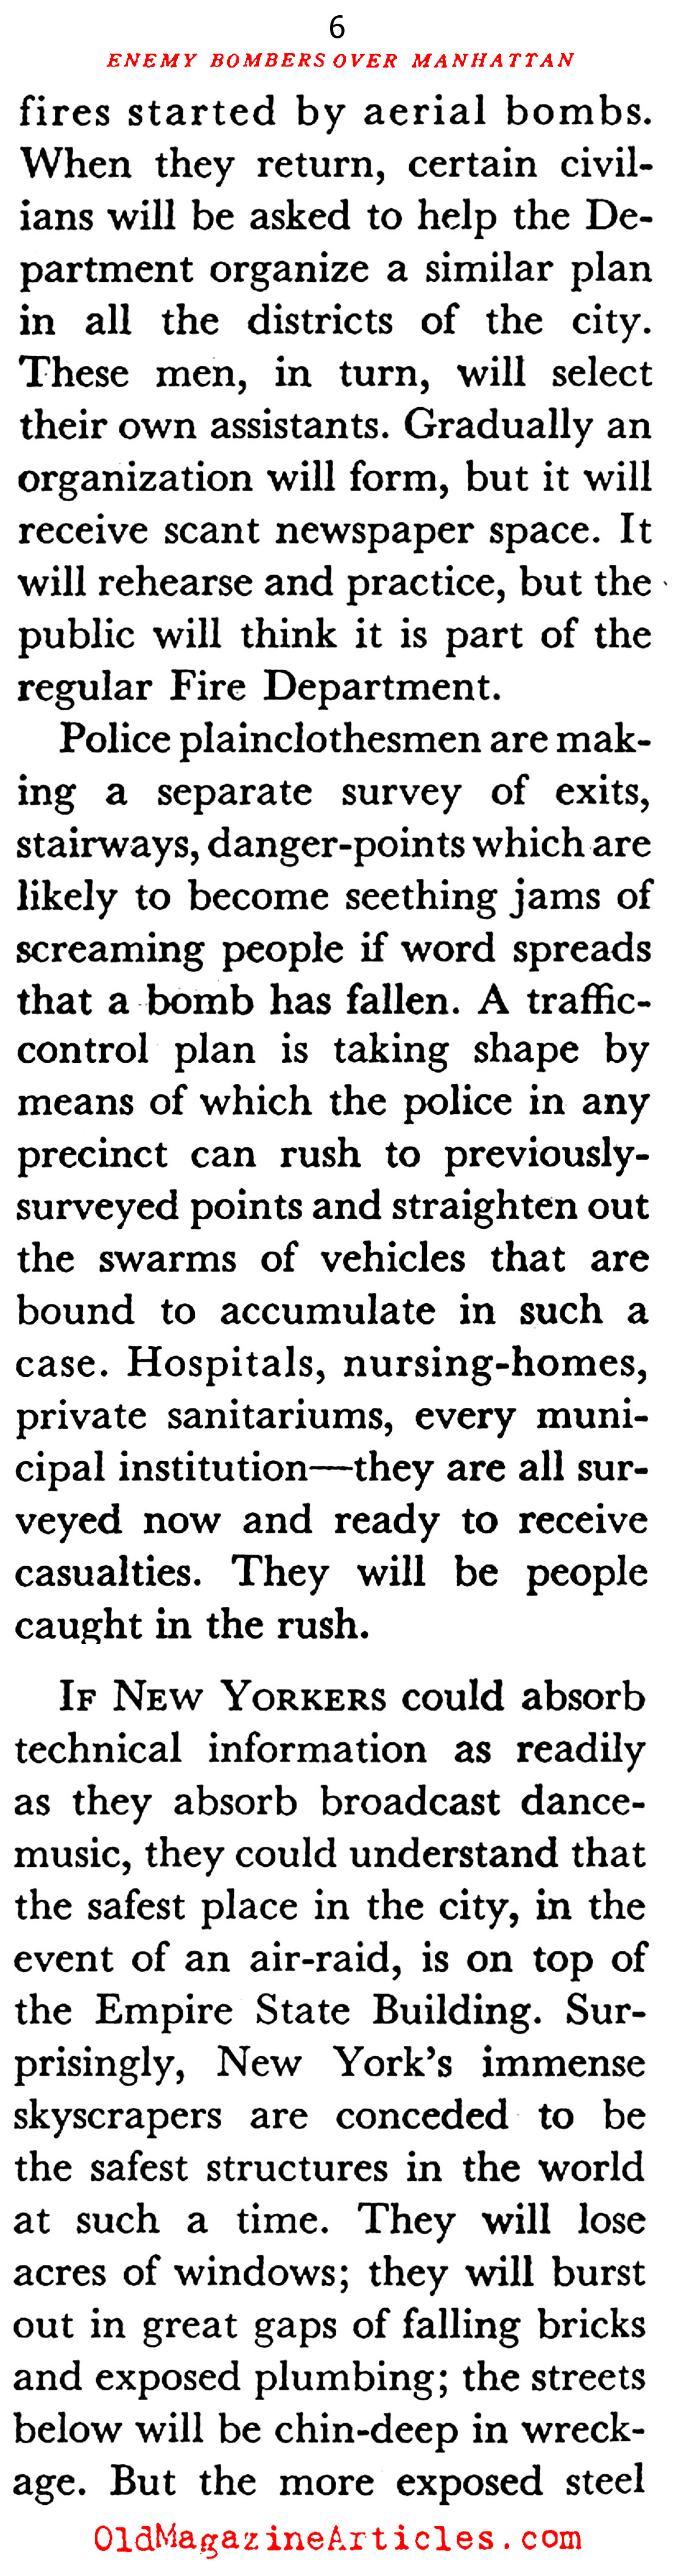 New York Beneath a Bombsight (Coronet Magazine, 1941)